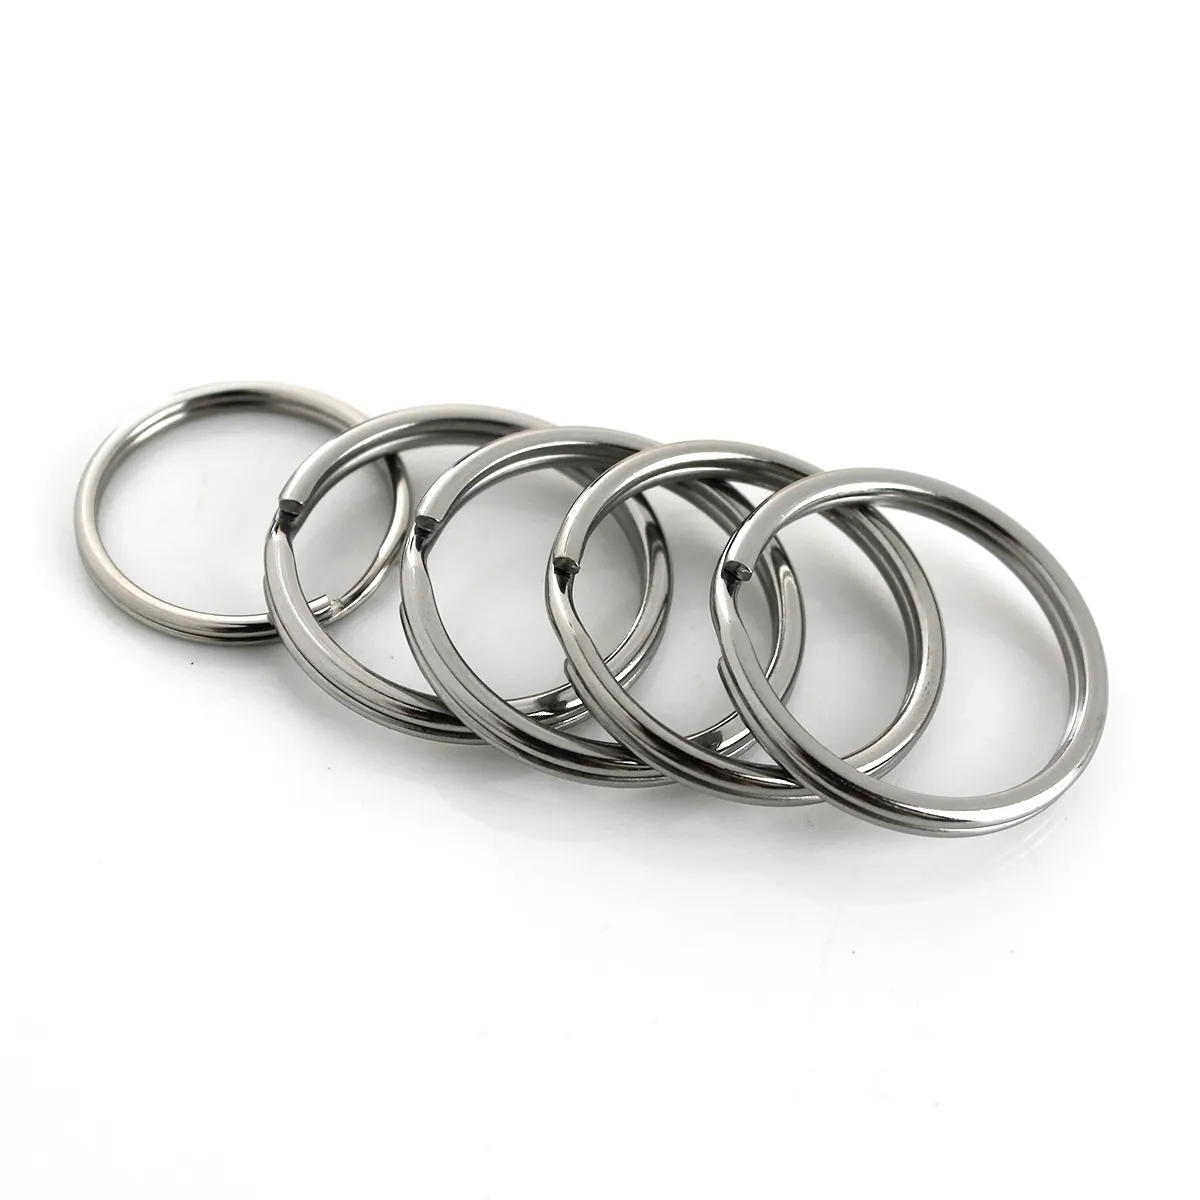 Metall Rund draht Split Ringe Doppels ch laufe Schlüssel ring 10-25mm Schlüssel bund Schlüssel halter DIY Leder Craft Hardware Edelstahl